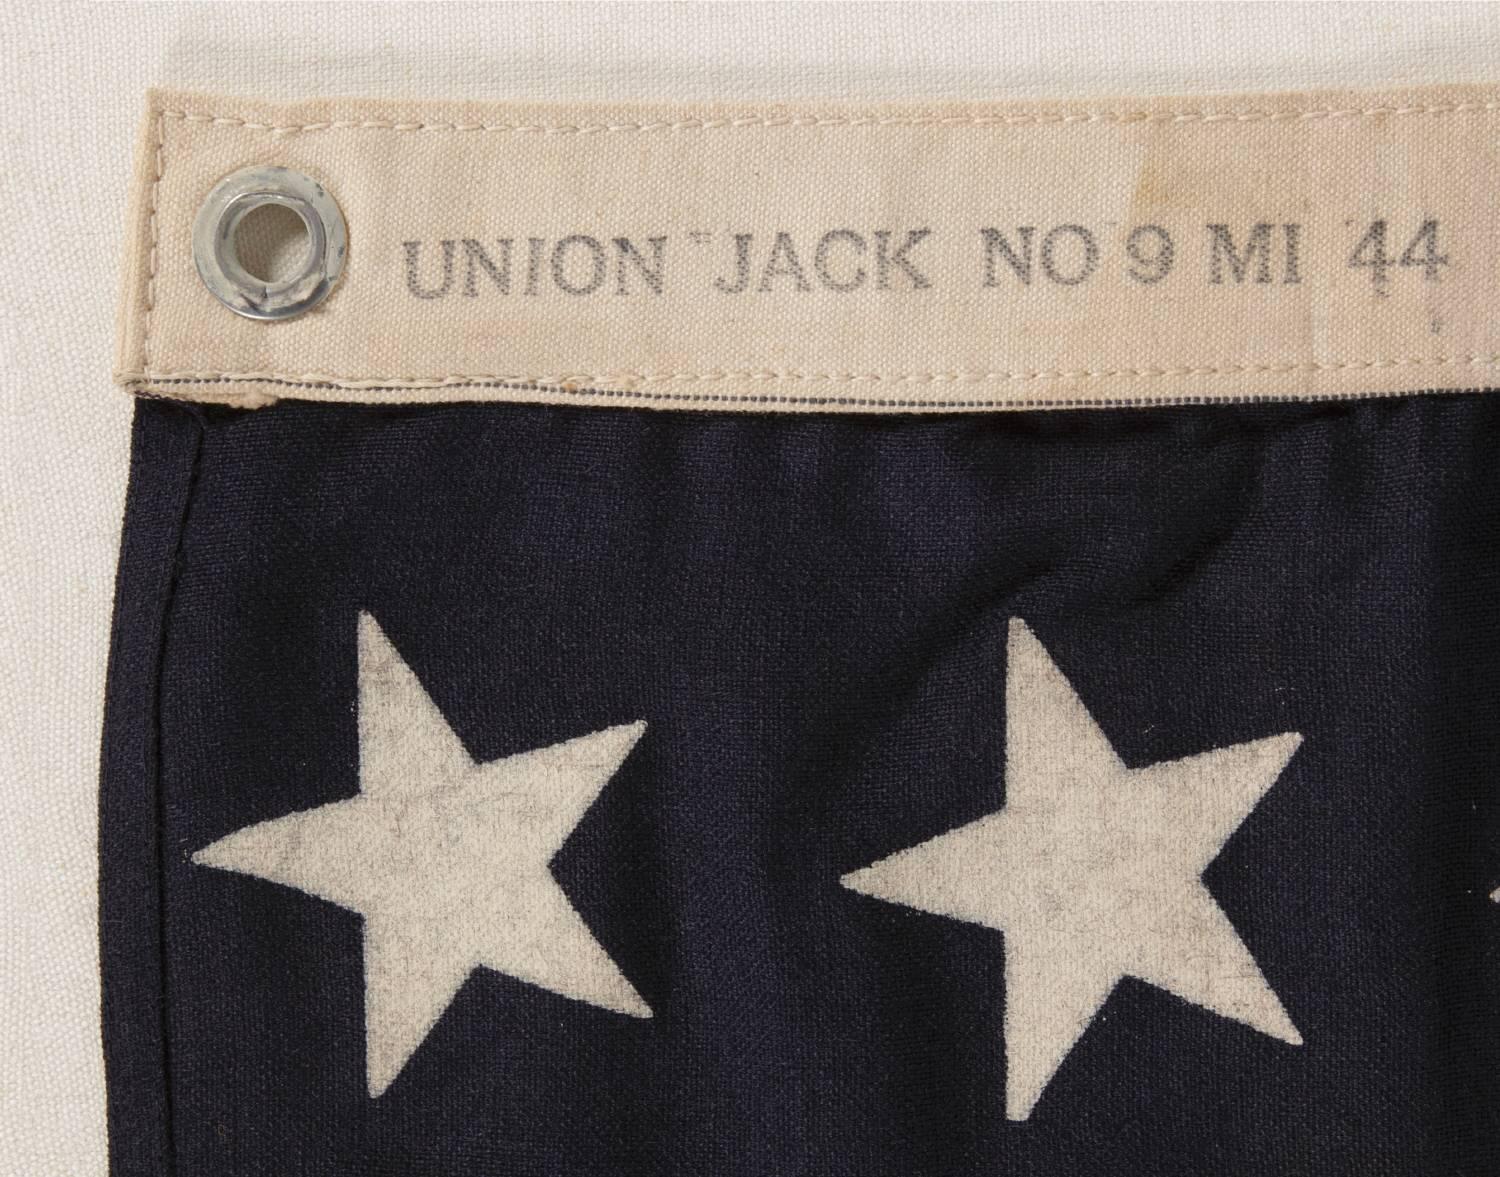 us navy union jack flag for sale